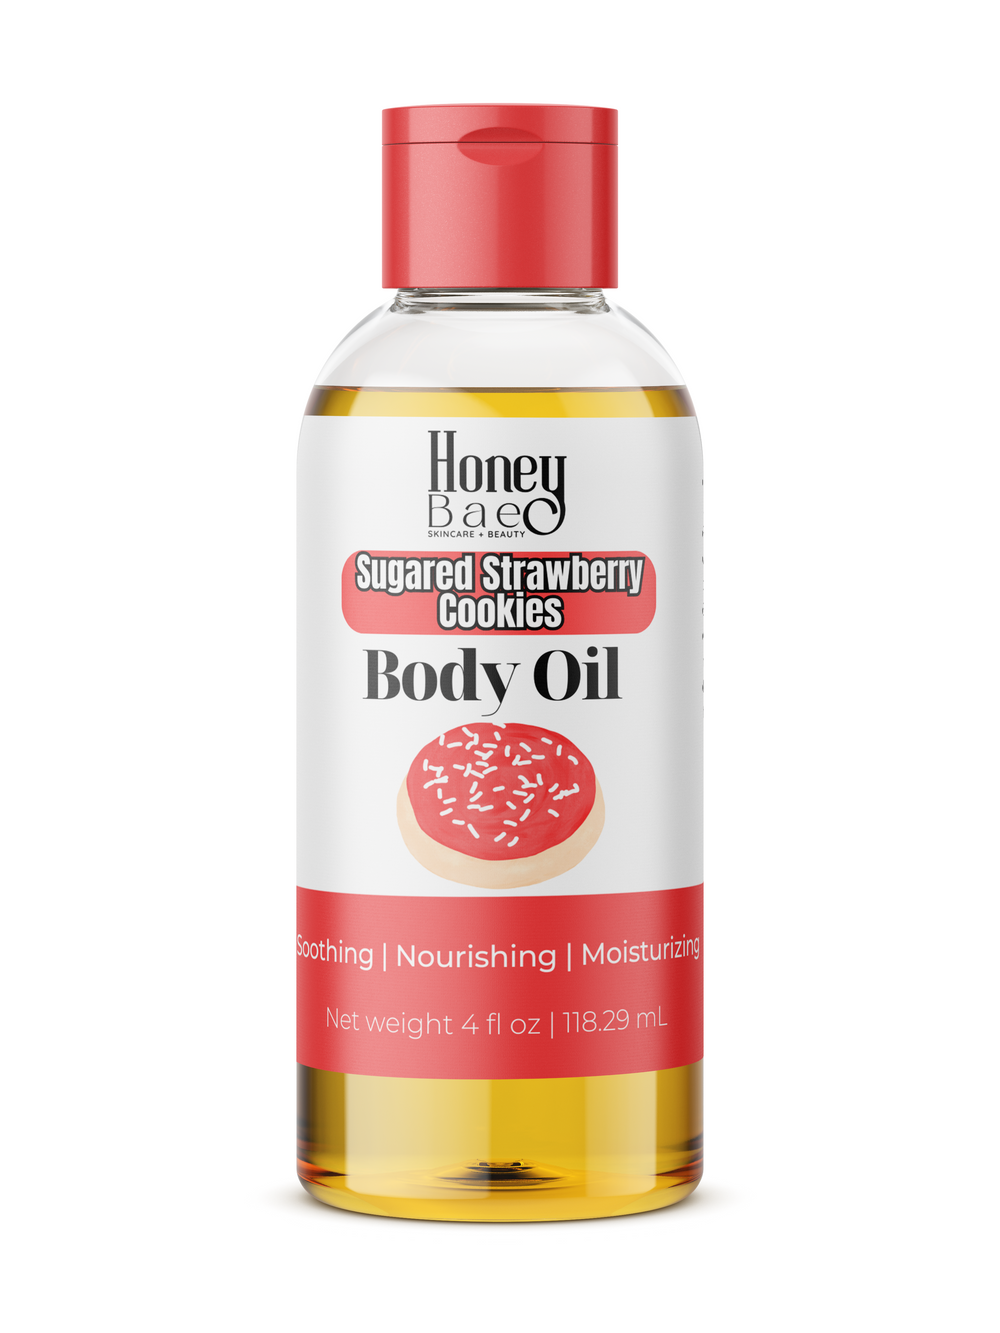 Sugared Strawberry Cookies - Body Oil